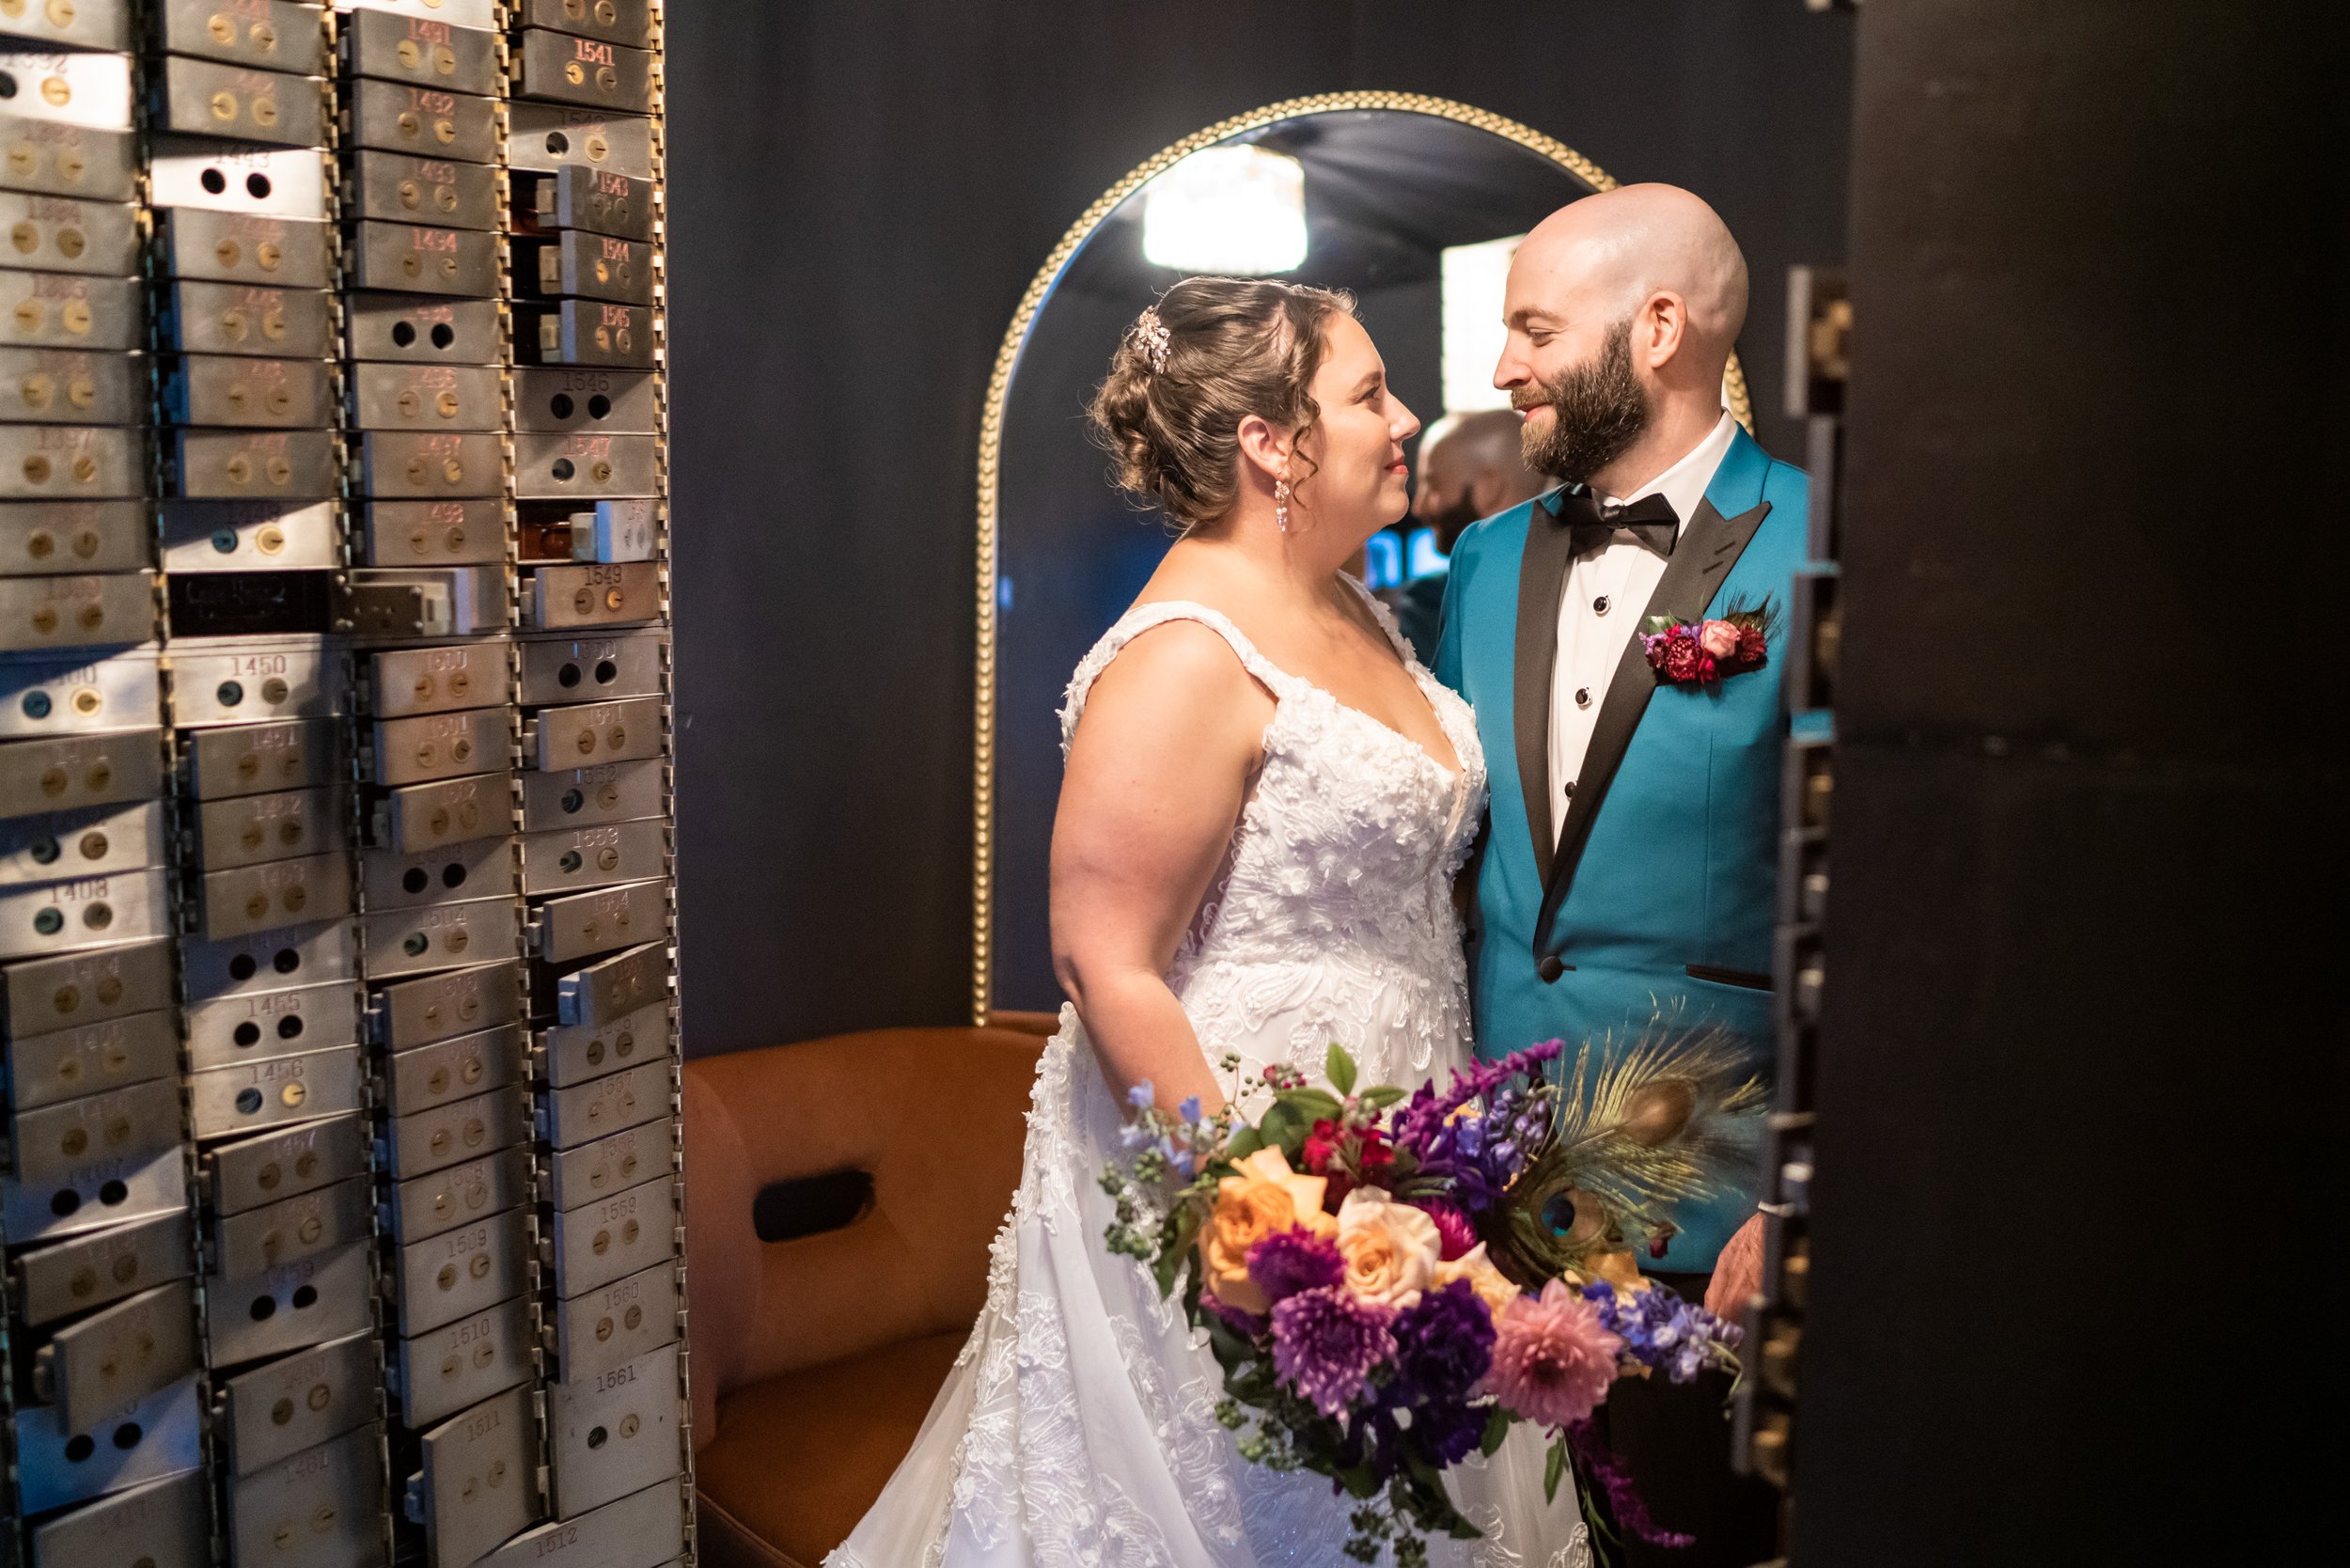 Bank Vault photos with bride and groom at Citizen's Ballroom wedding